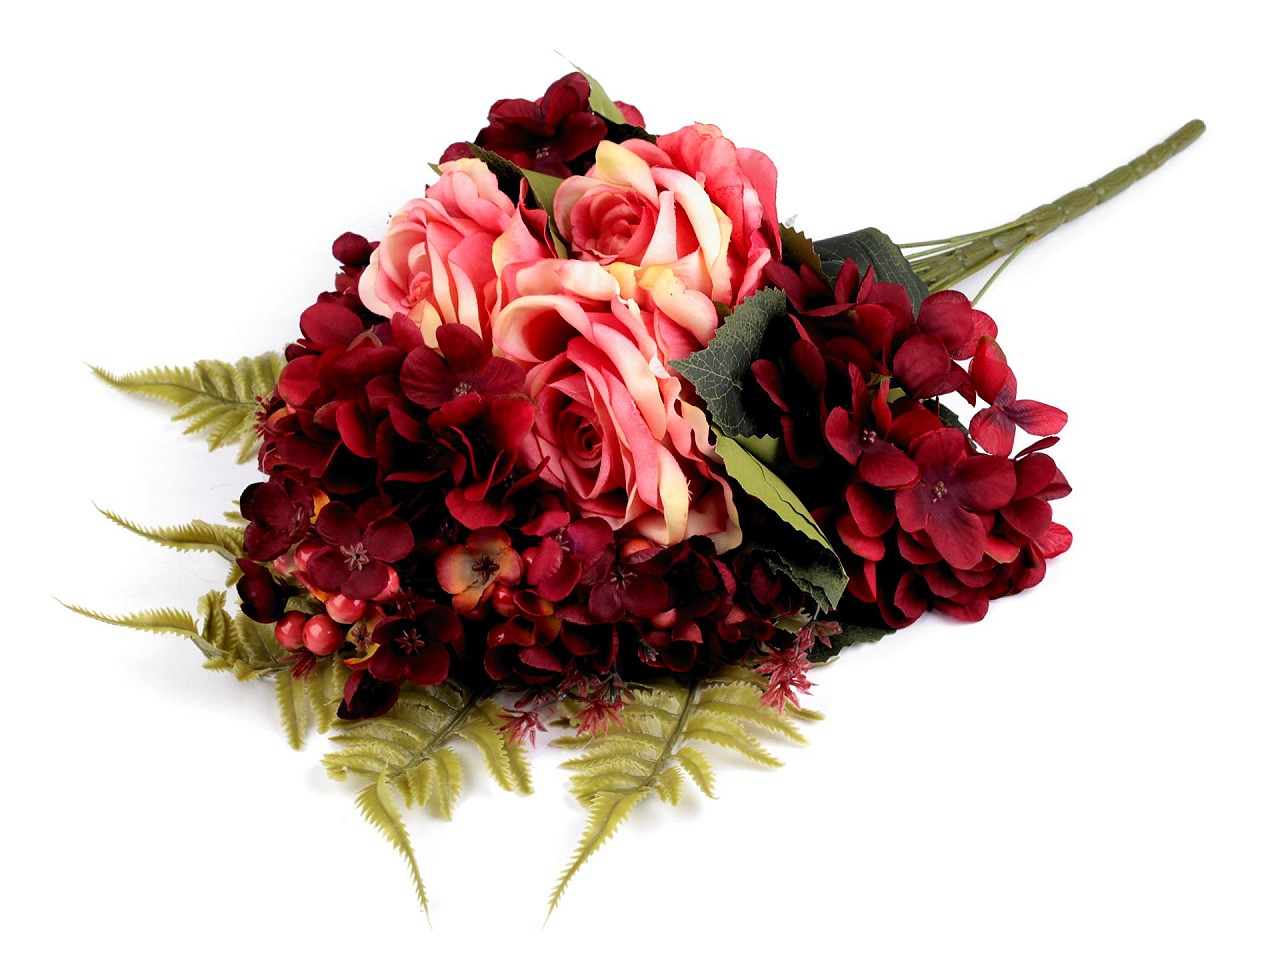 Textillux.sk - produkt Umelá kytica ruže a hortenzie